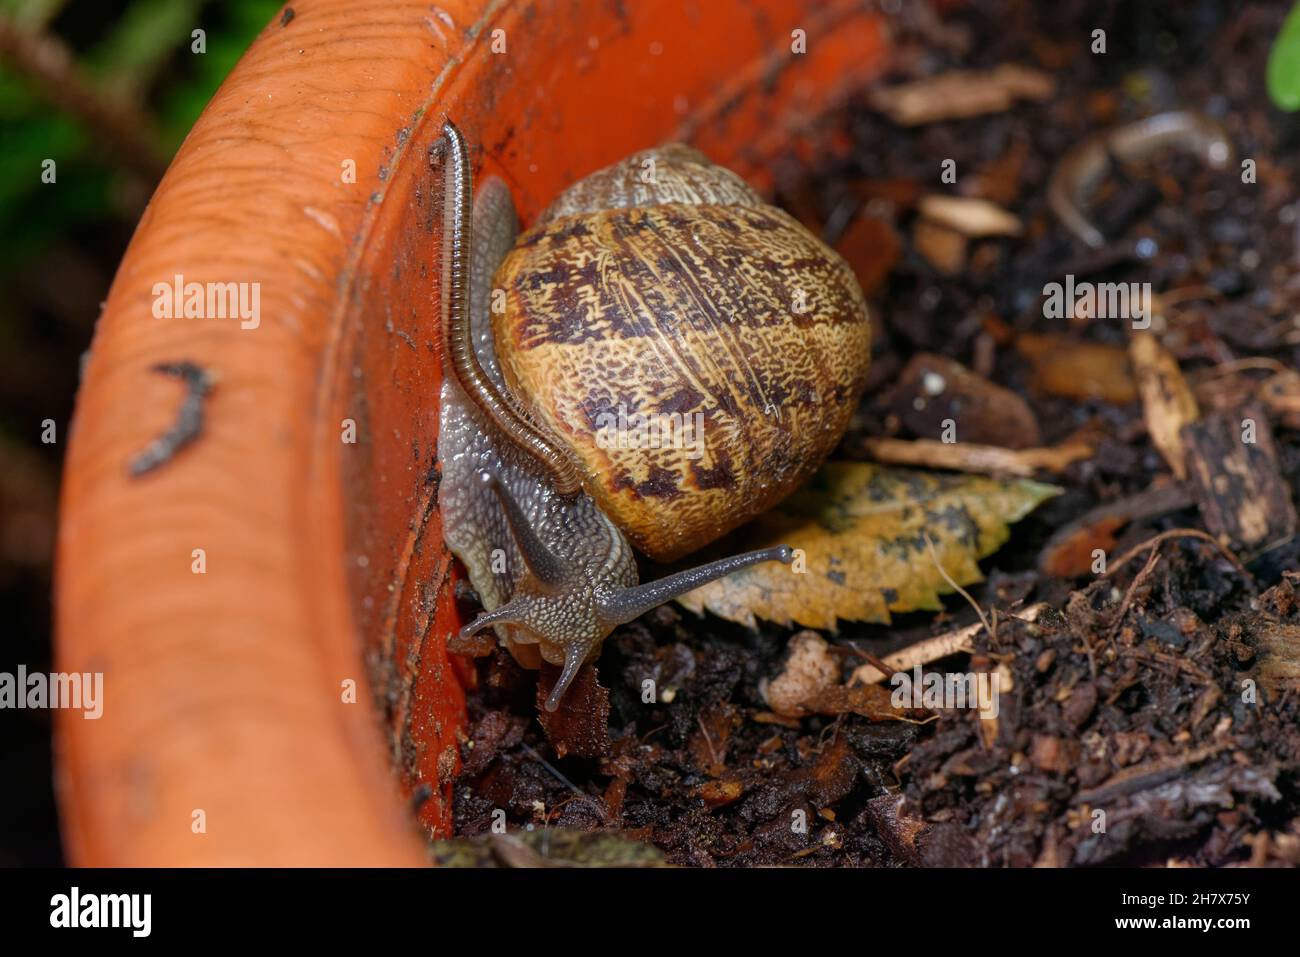 Millipede (Leptoiulus sp.) feeding on the mucus of a Garden snail (Cornu aspersum) in a flowerpot on a garden patio at night, Wiltshire, UK, October. Stock Photo